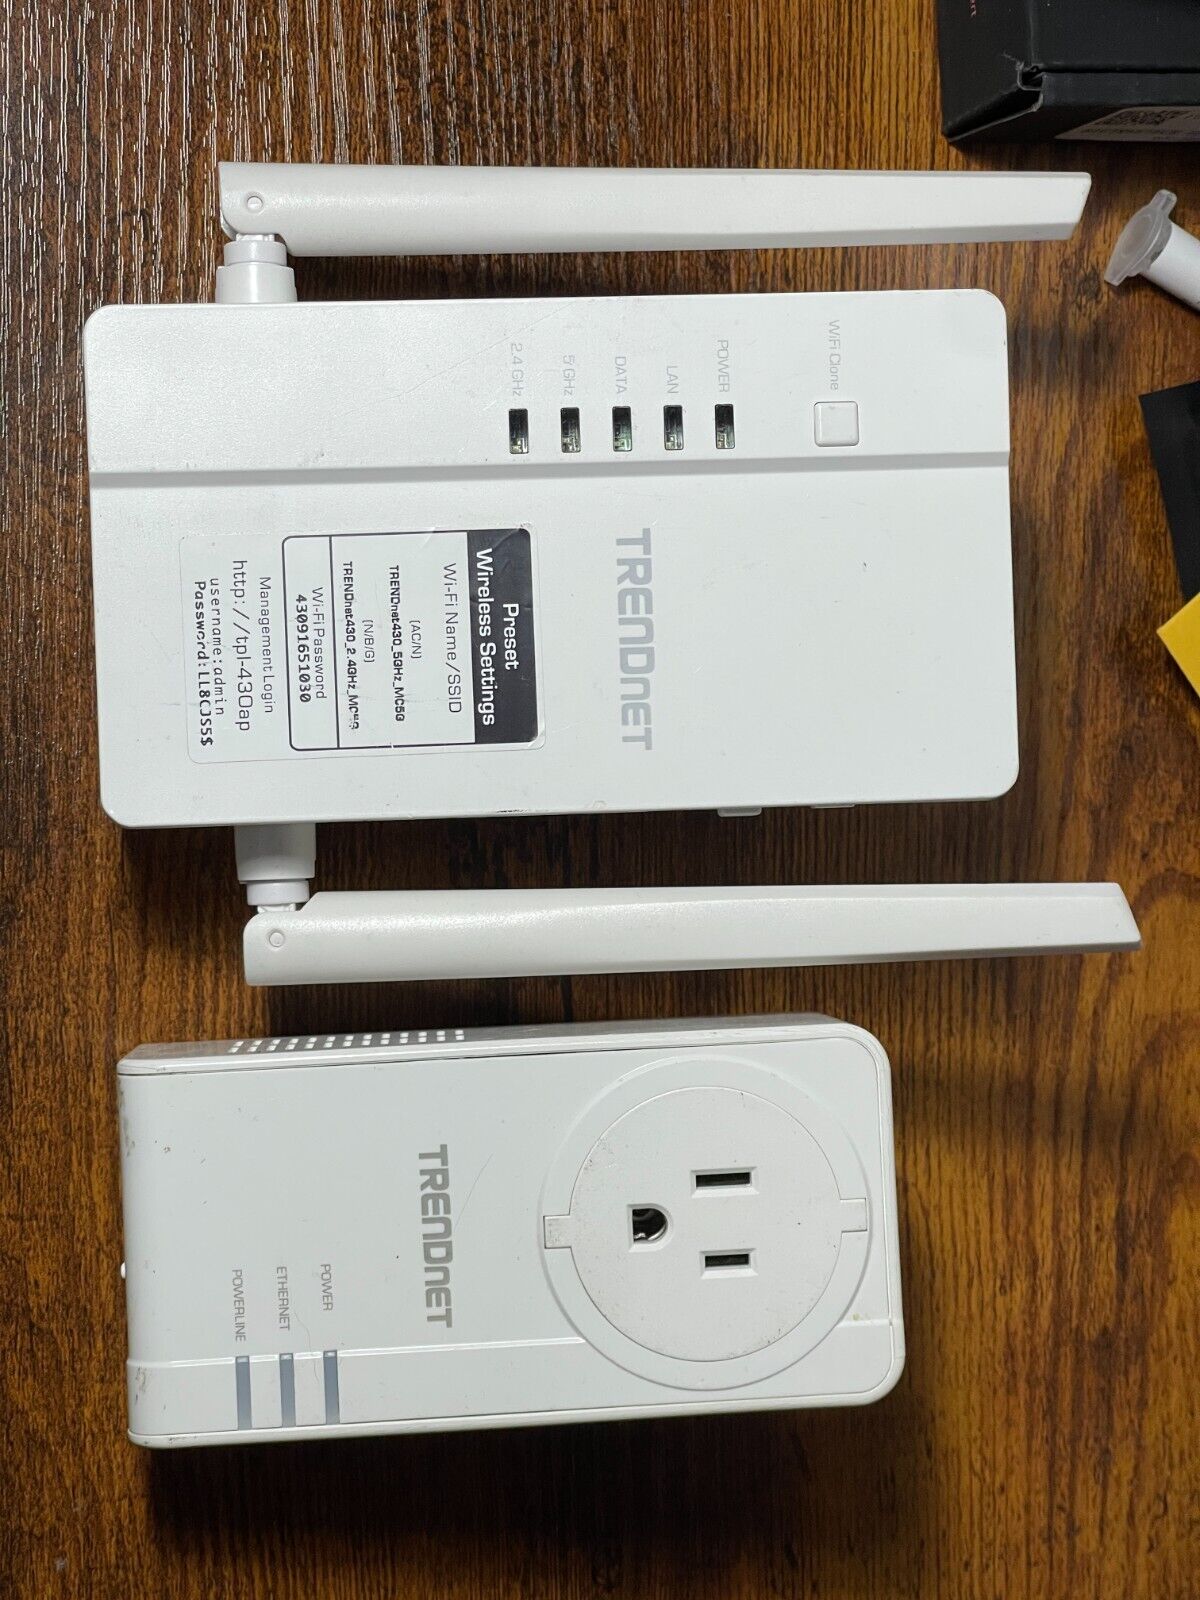 TRENDNET  TPL-430AP/A TPL-423 E/A WIFI POWERLINE WIRELESS KIT Wifi Extender 